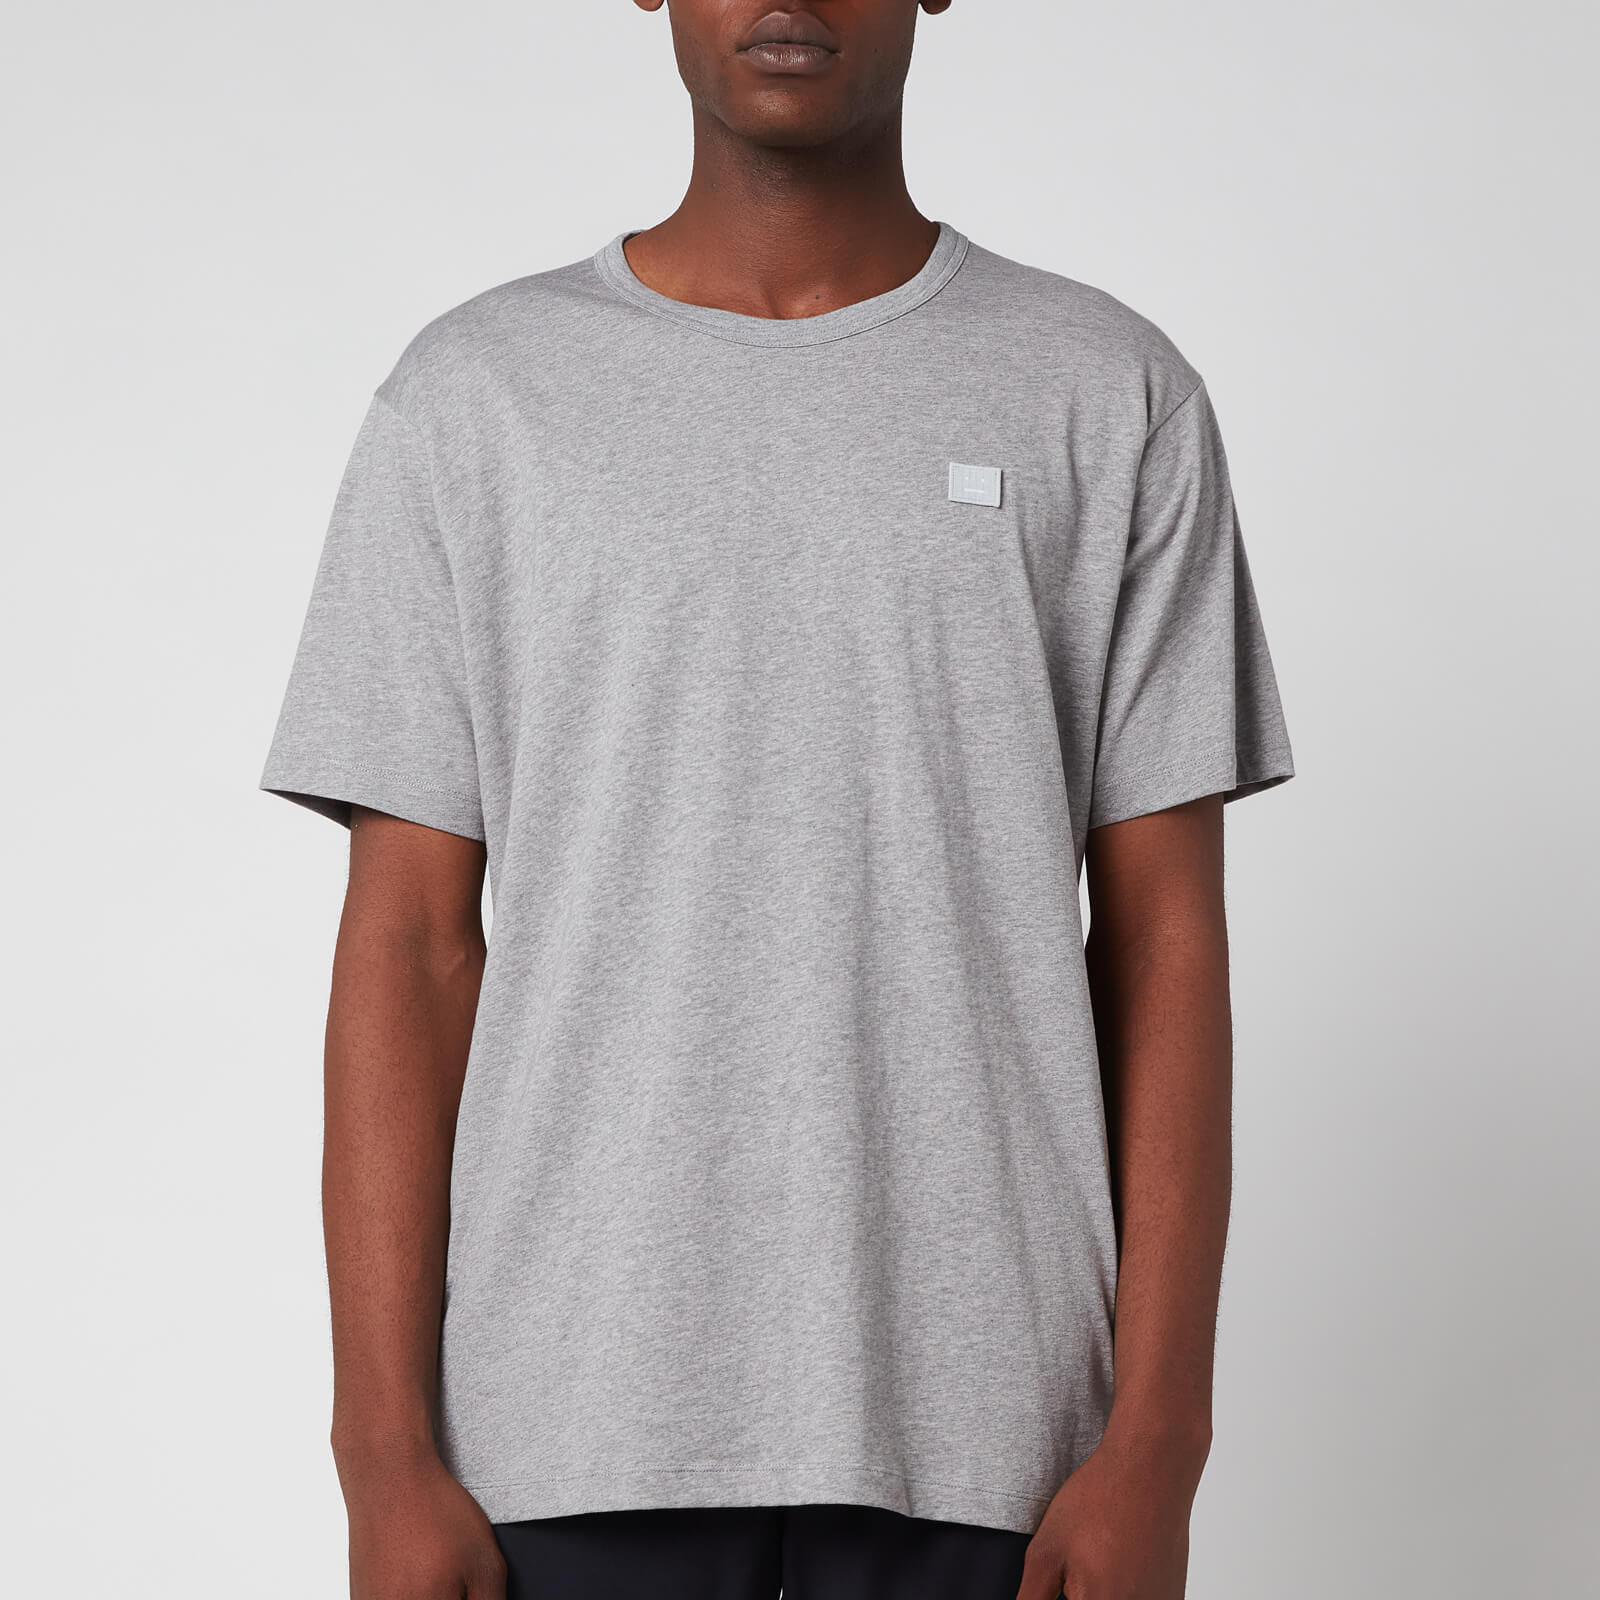 Acne Studios Men's Regular Fit Face Patch T-Shirt - Light Grey Melange - S - Grey